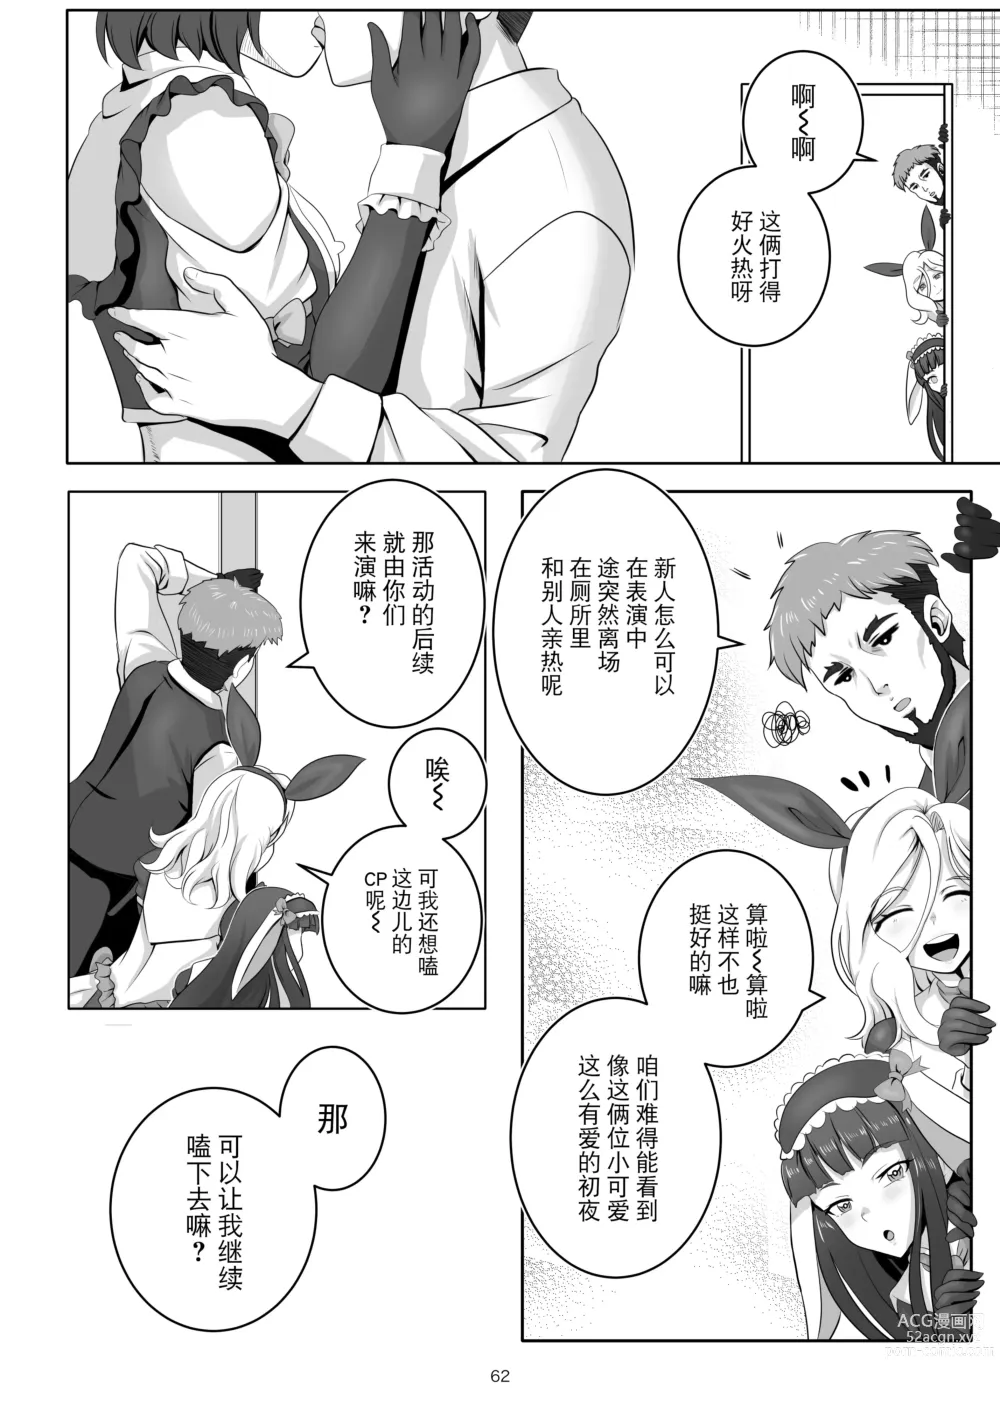 Page 62 of doujinshi Bunny x Baito Party